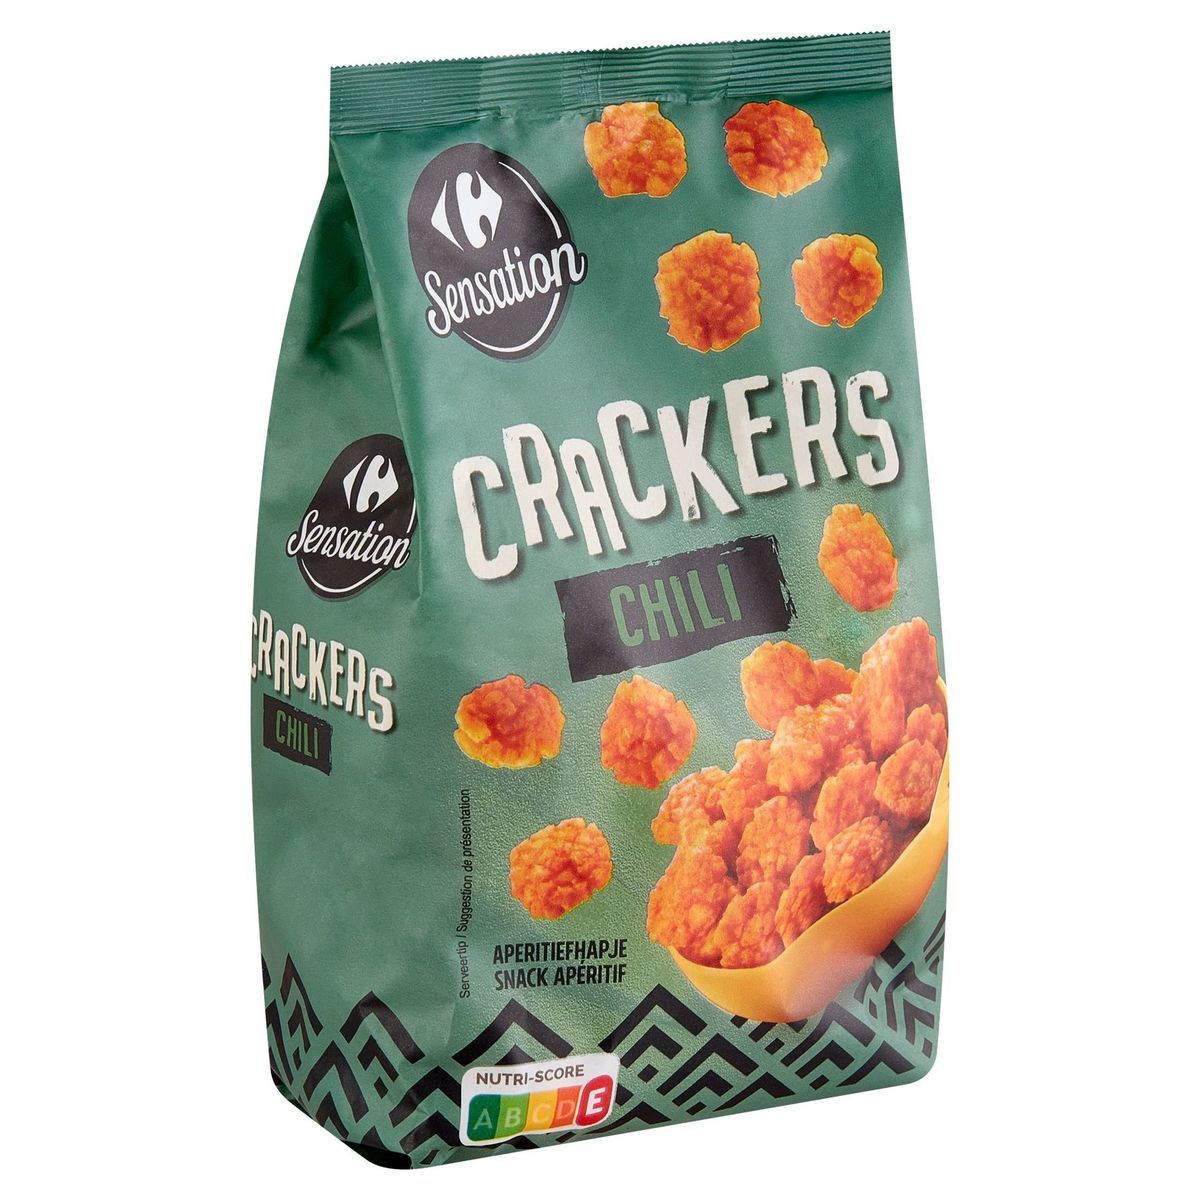 Carrefour Snack Apéritif Chili Crackers 150 g